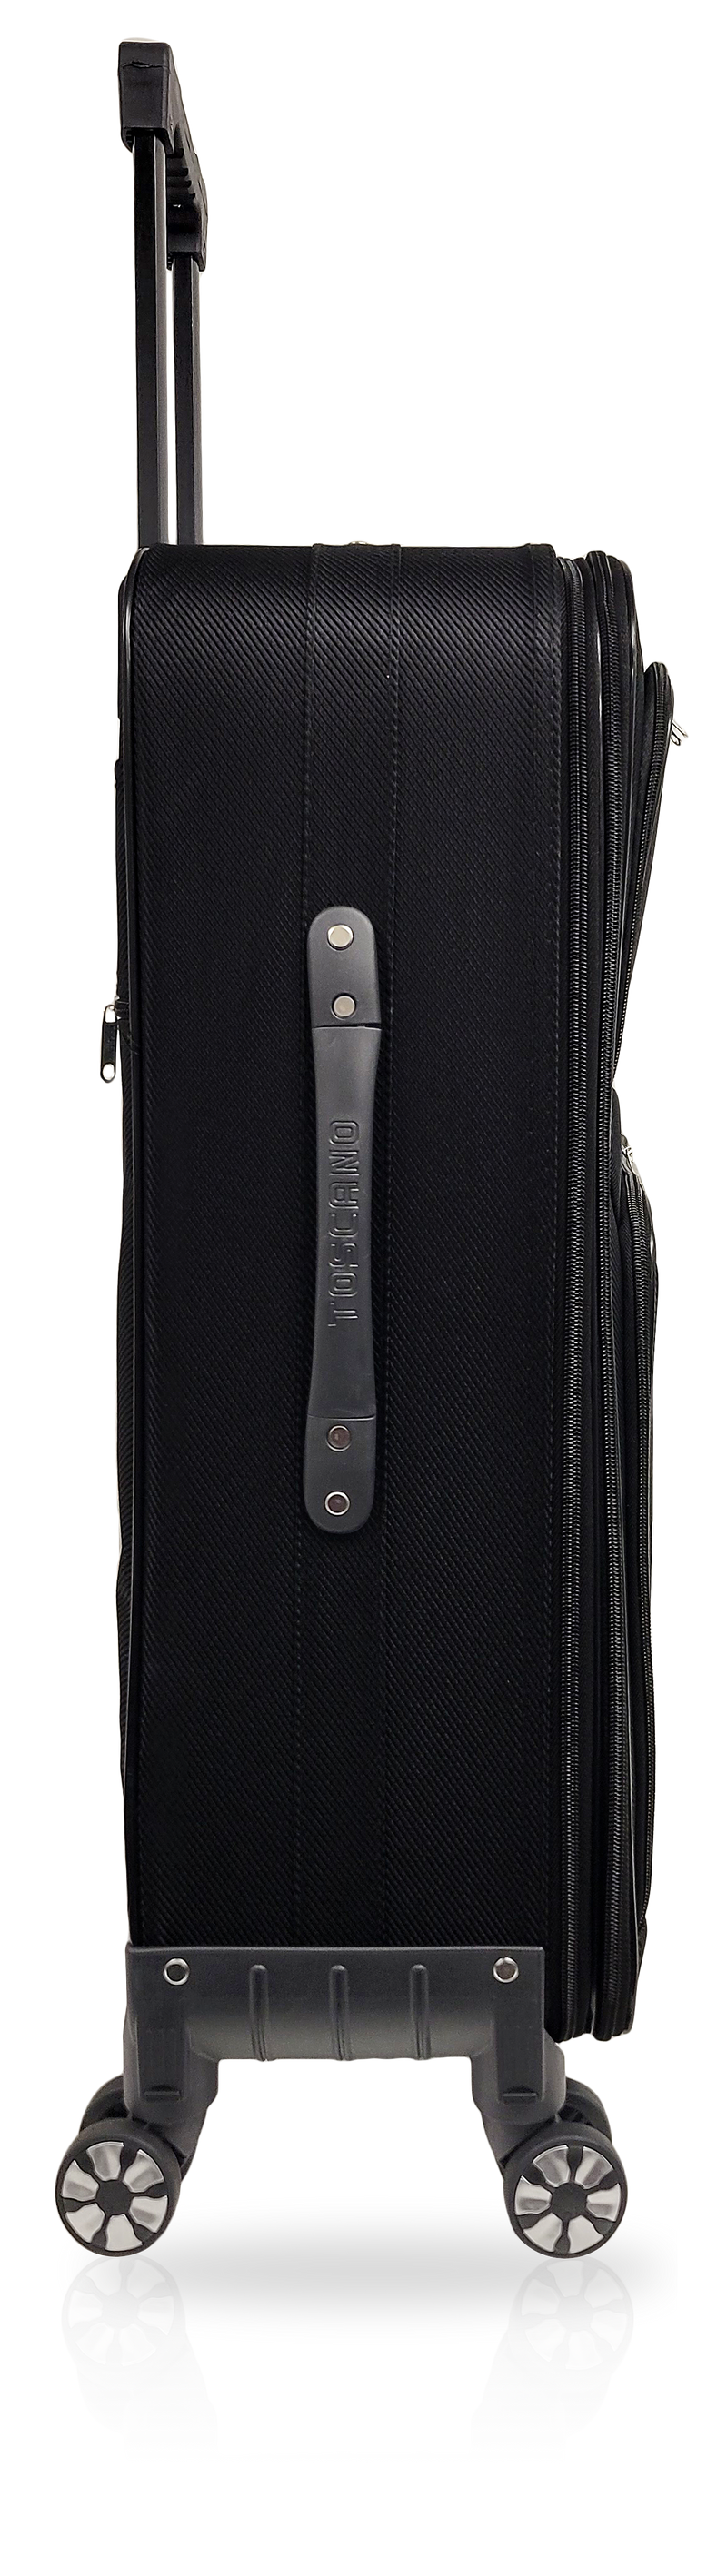 TOSCANO Aiutante 27-inch Lightweight Luggage Suitcase